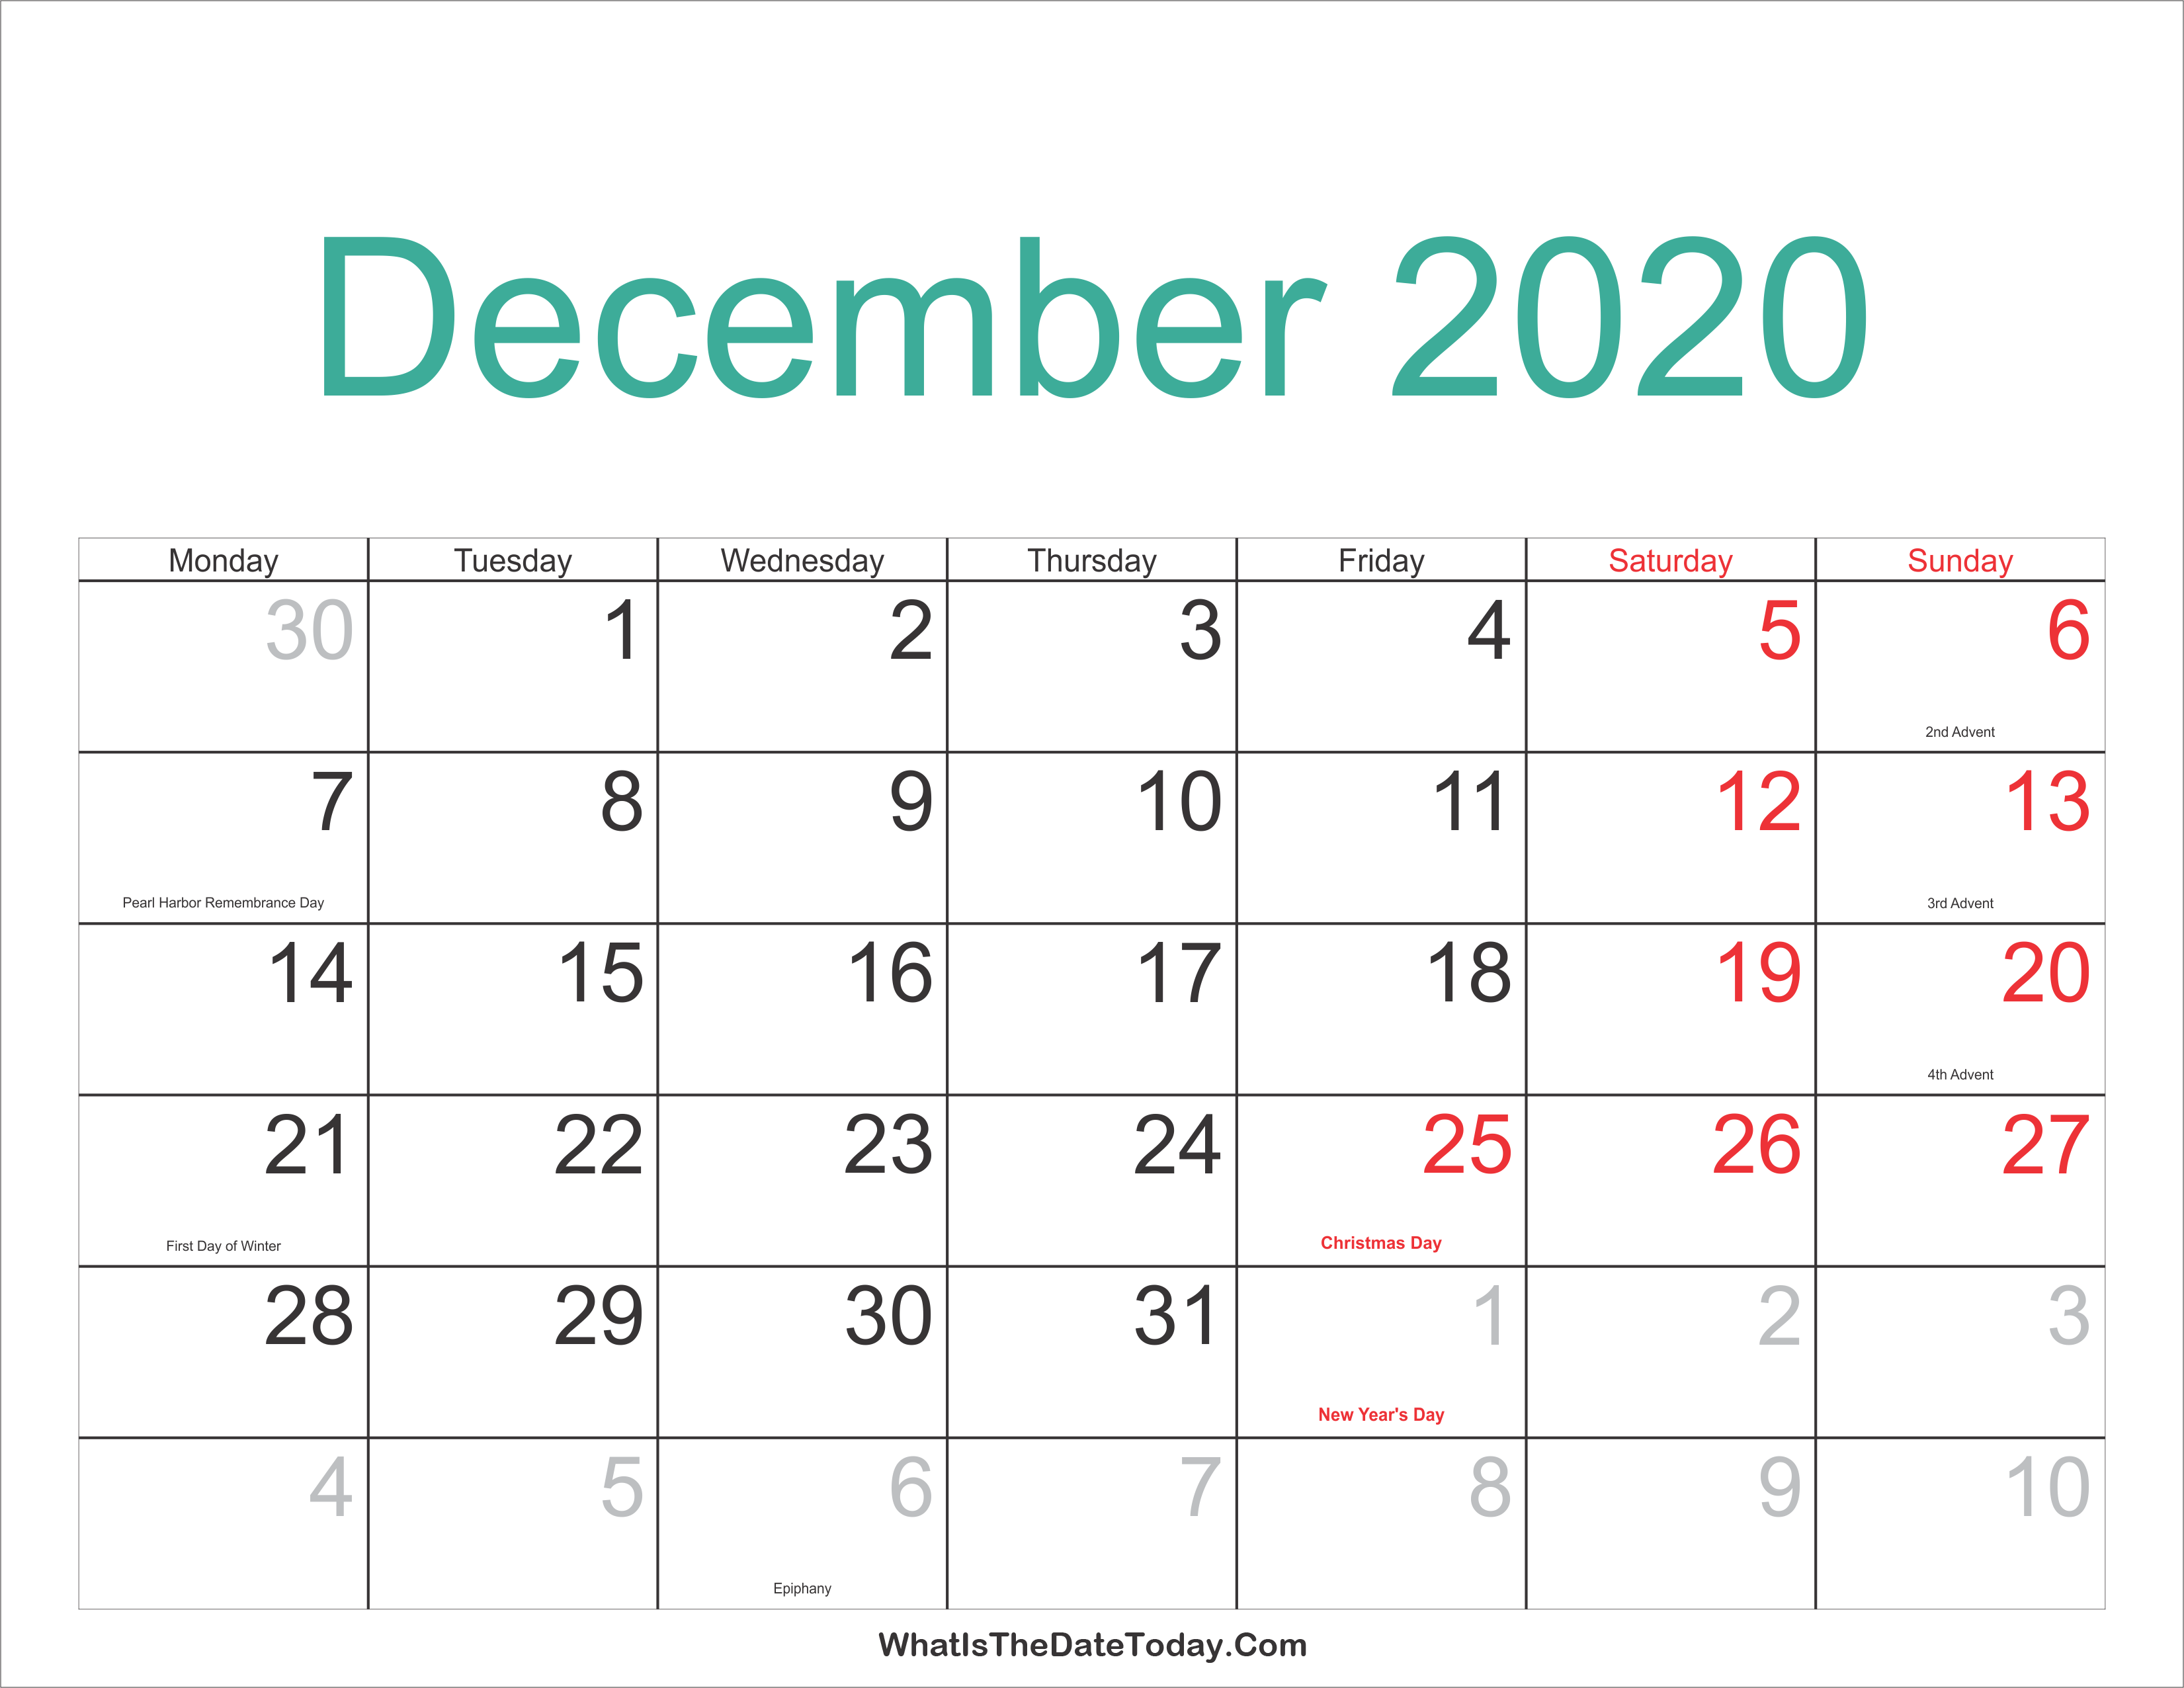 December 2020 Calendar Printable with Holidays | Whatisthedatetoday.Com